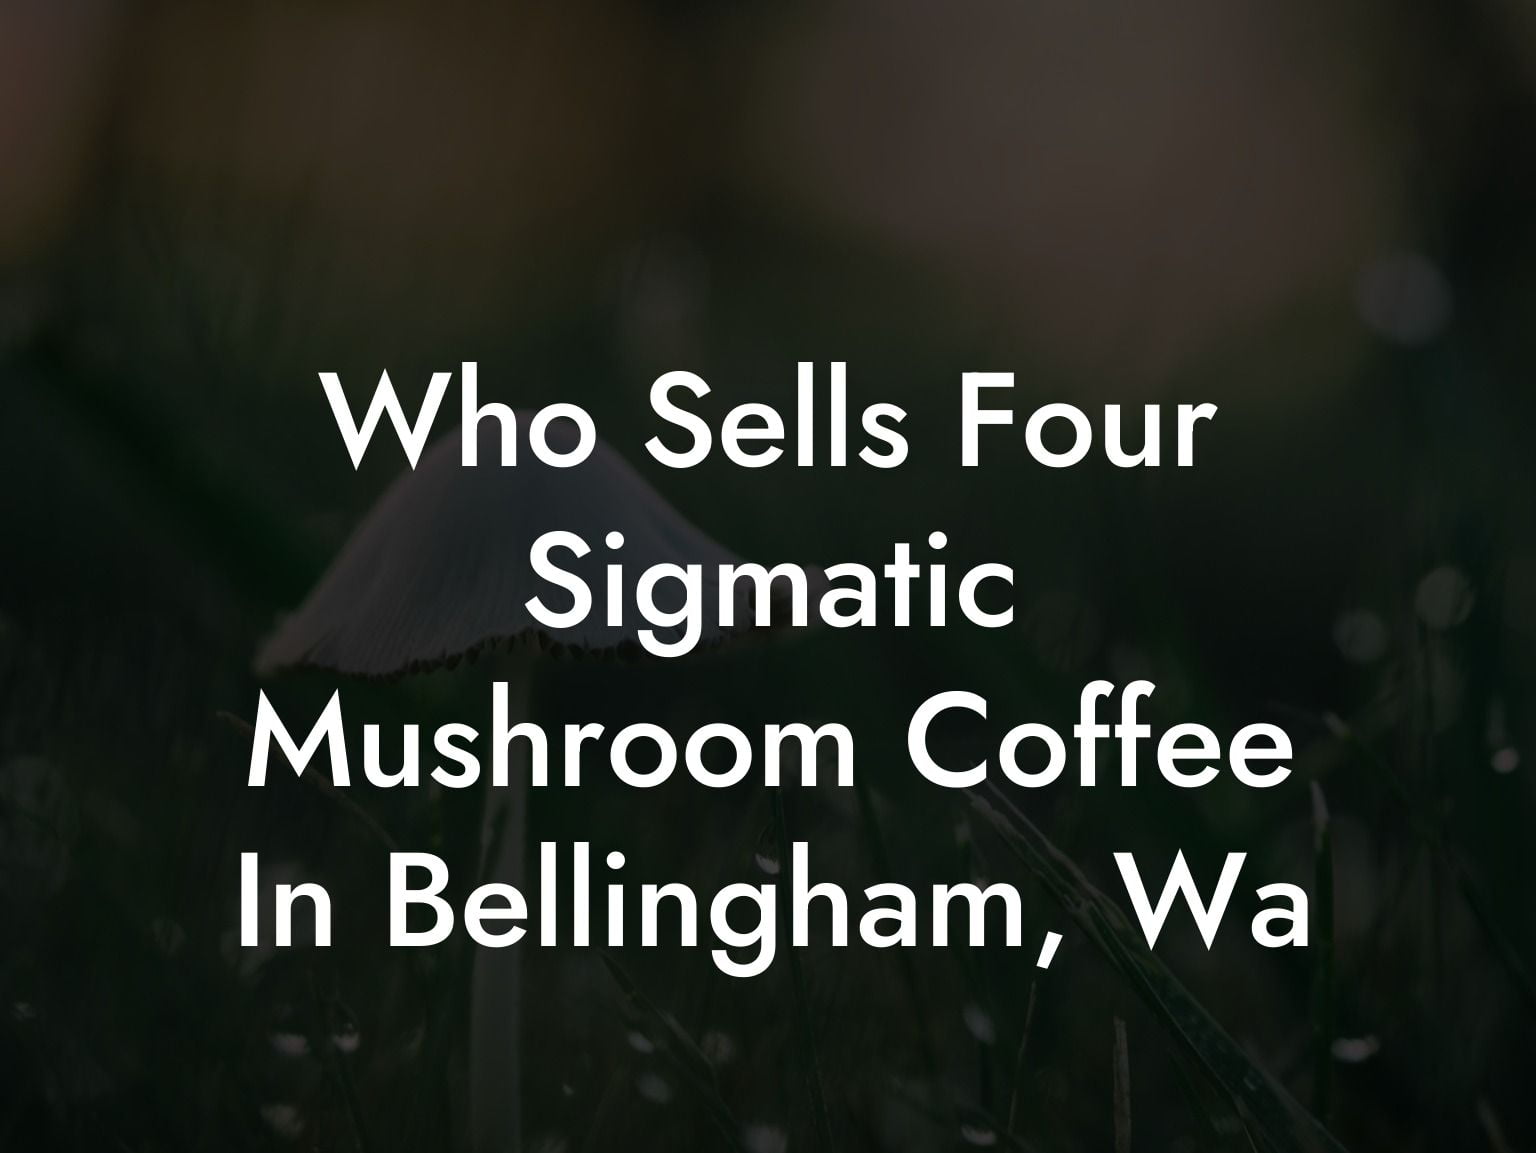 Who Sells Four Sigmatic Mushroom Coffee In Bellingham, Wa